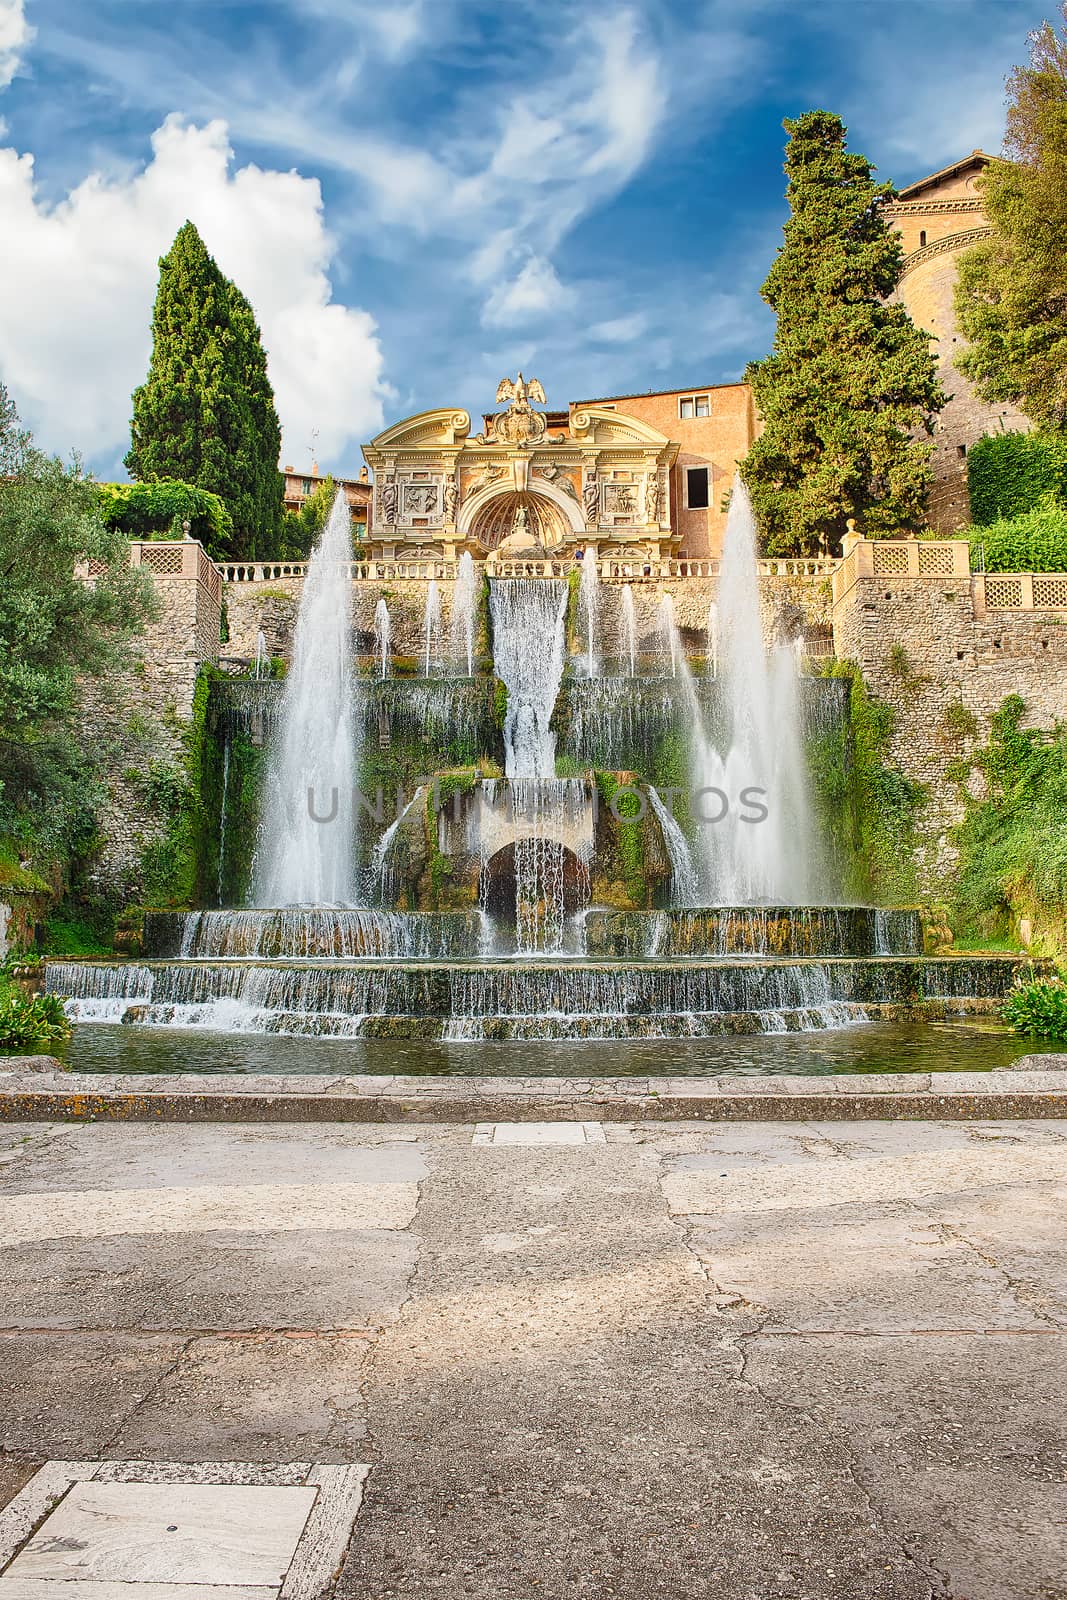 The Fountain of Neptune, Villa d'Este, Tivoli, Italy by marcorubino